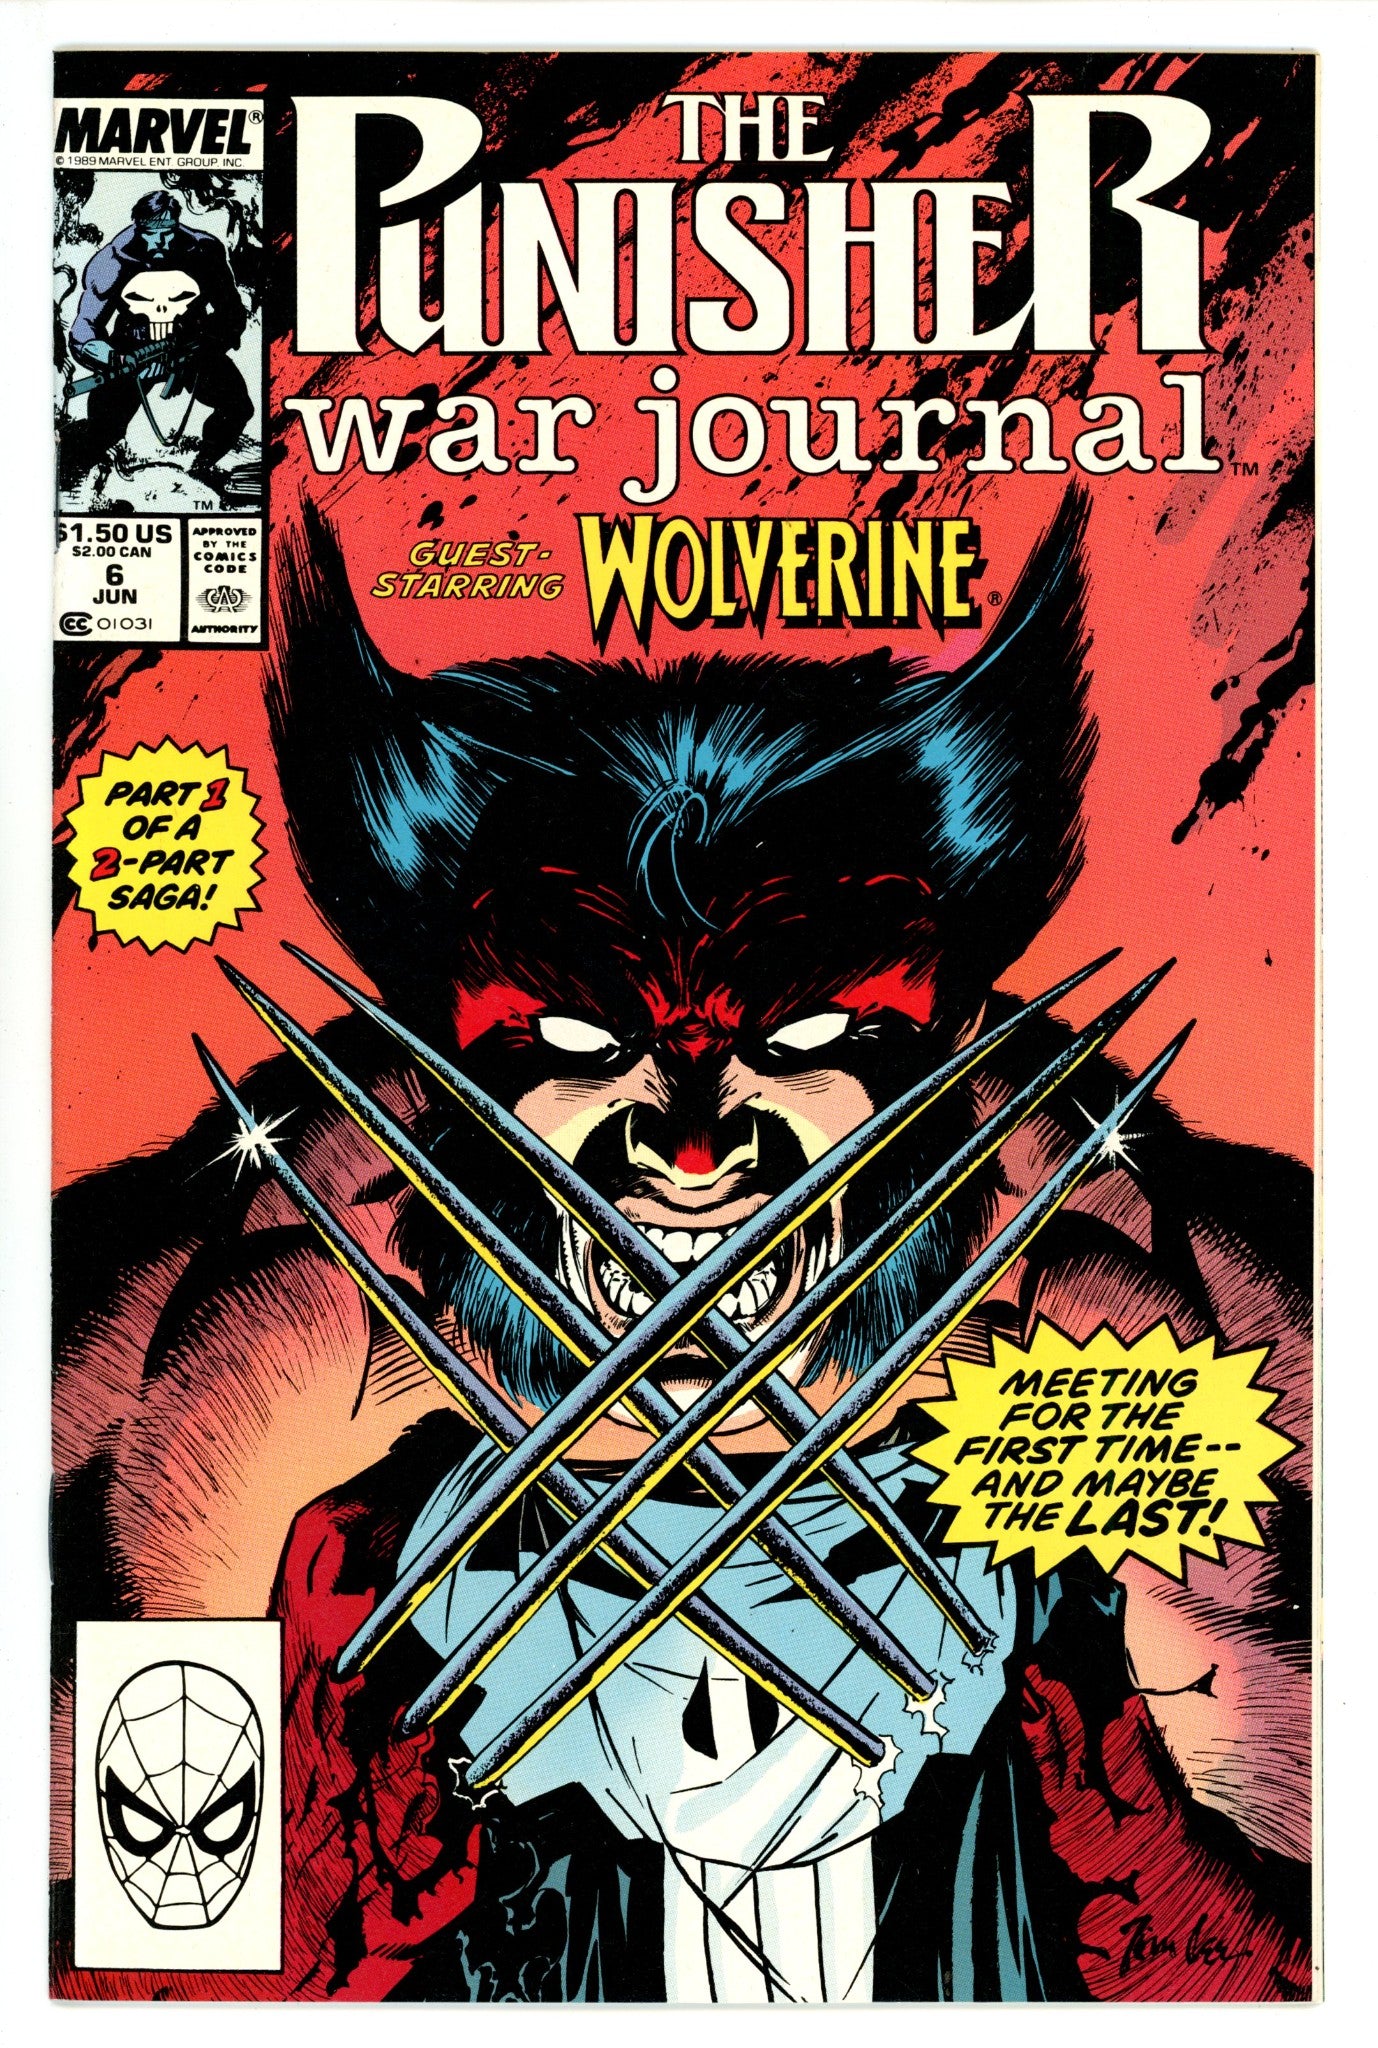 The Punisher War Journal Vol 1 6 VF/NM (9.0) (1989) 